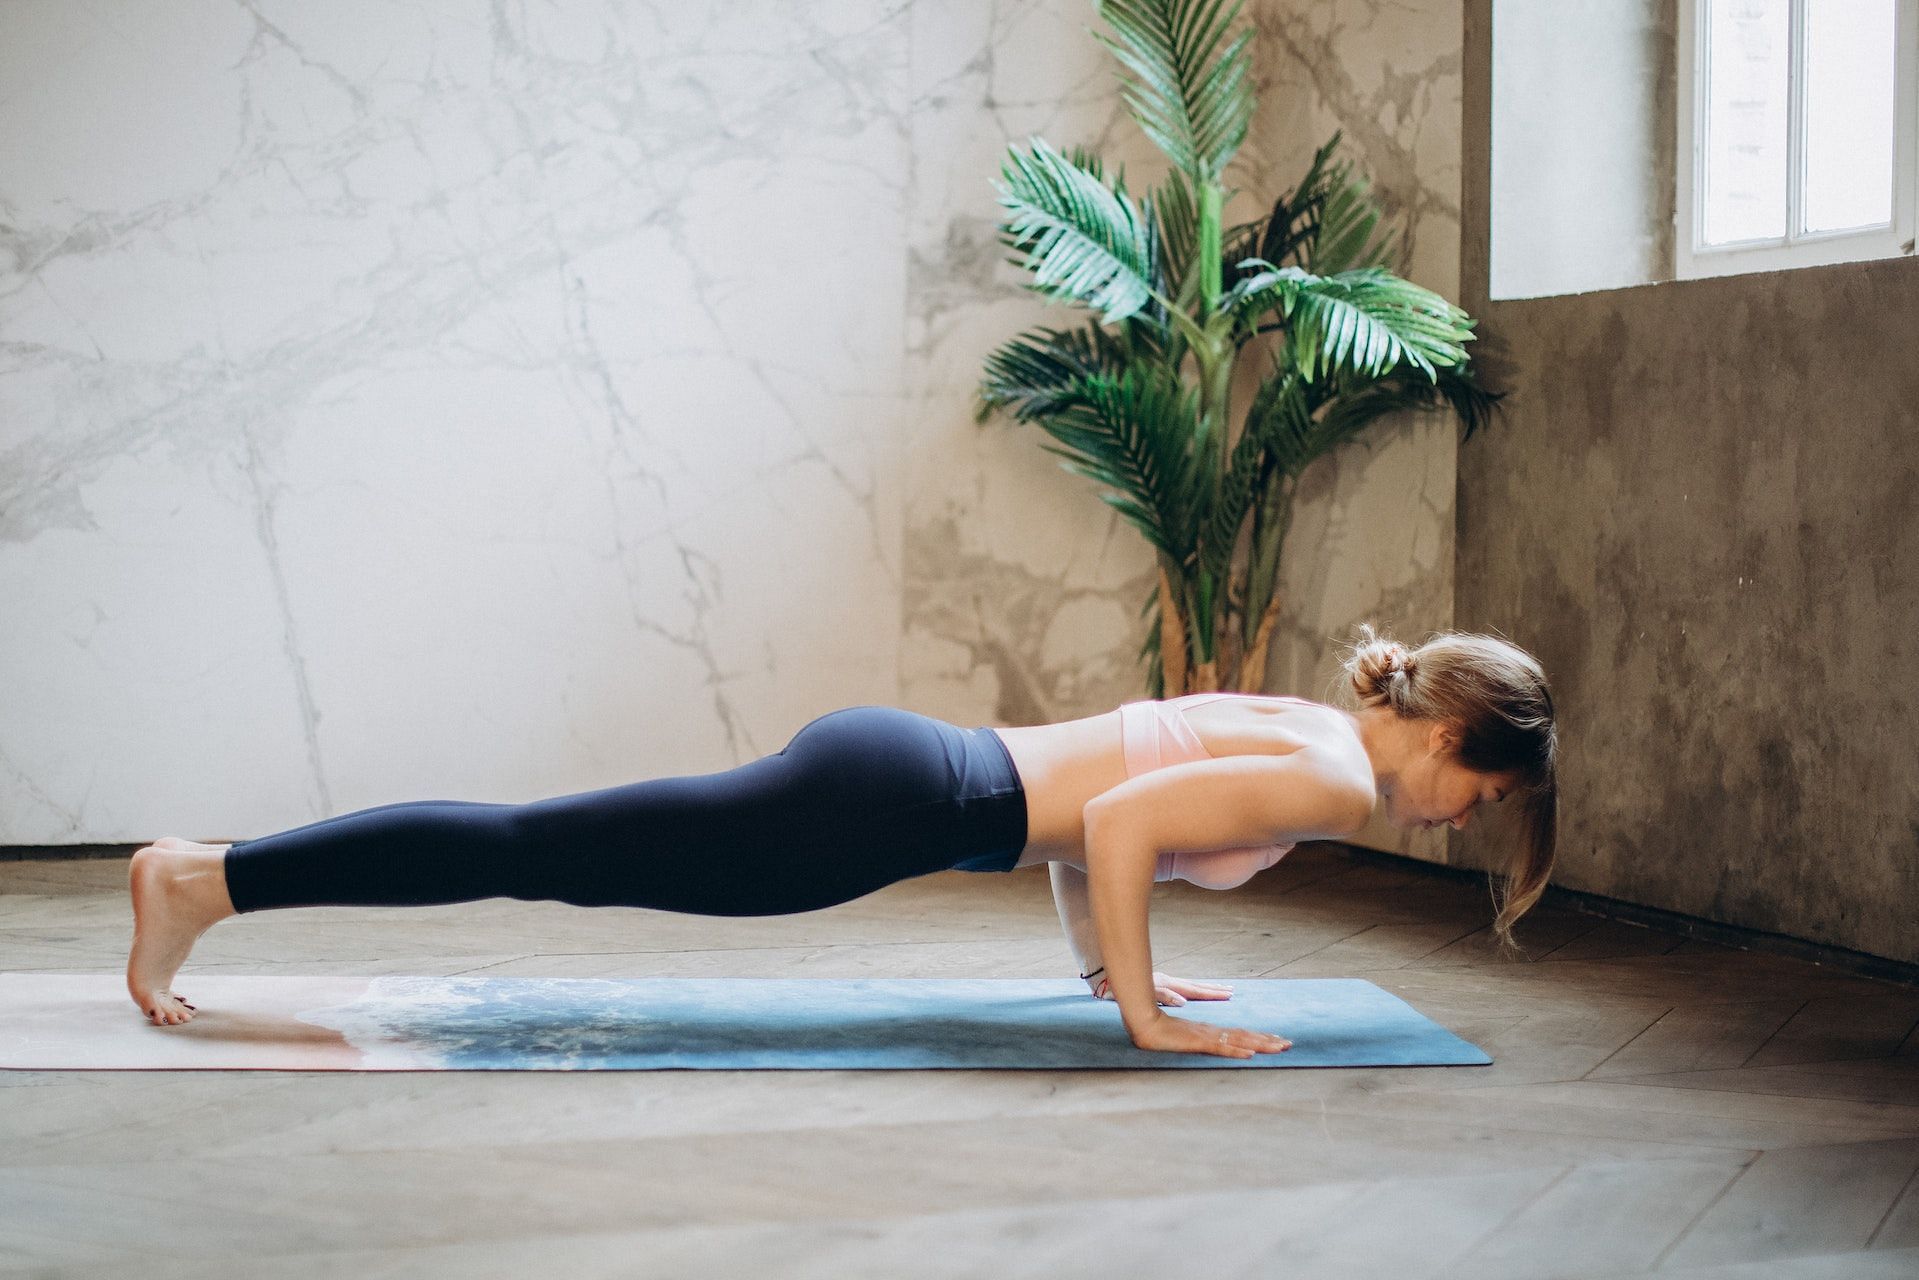 Yoga exercises increase shoulder strength. (Photo via Pexels/Elina Fairytale)